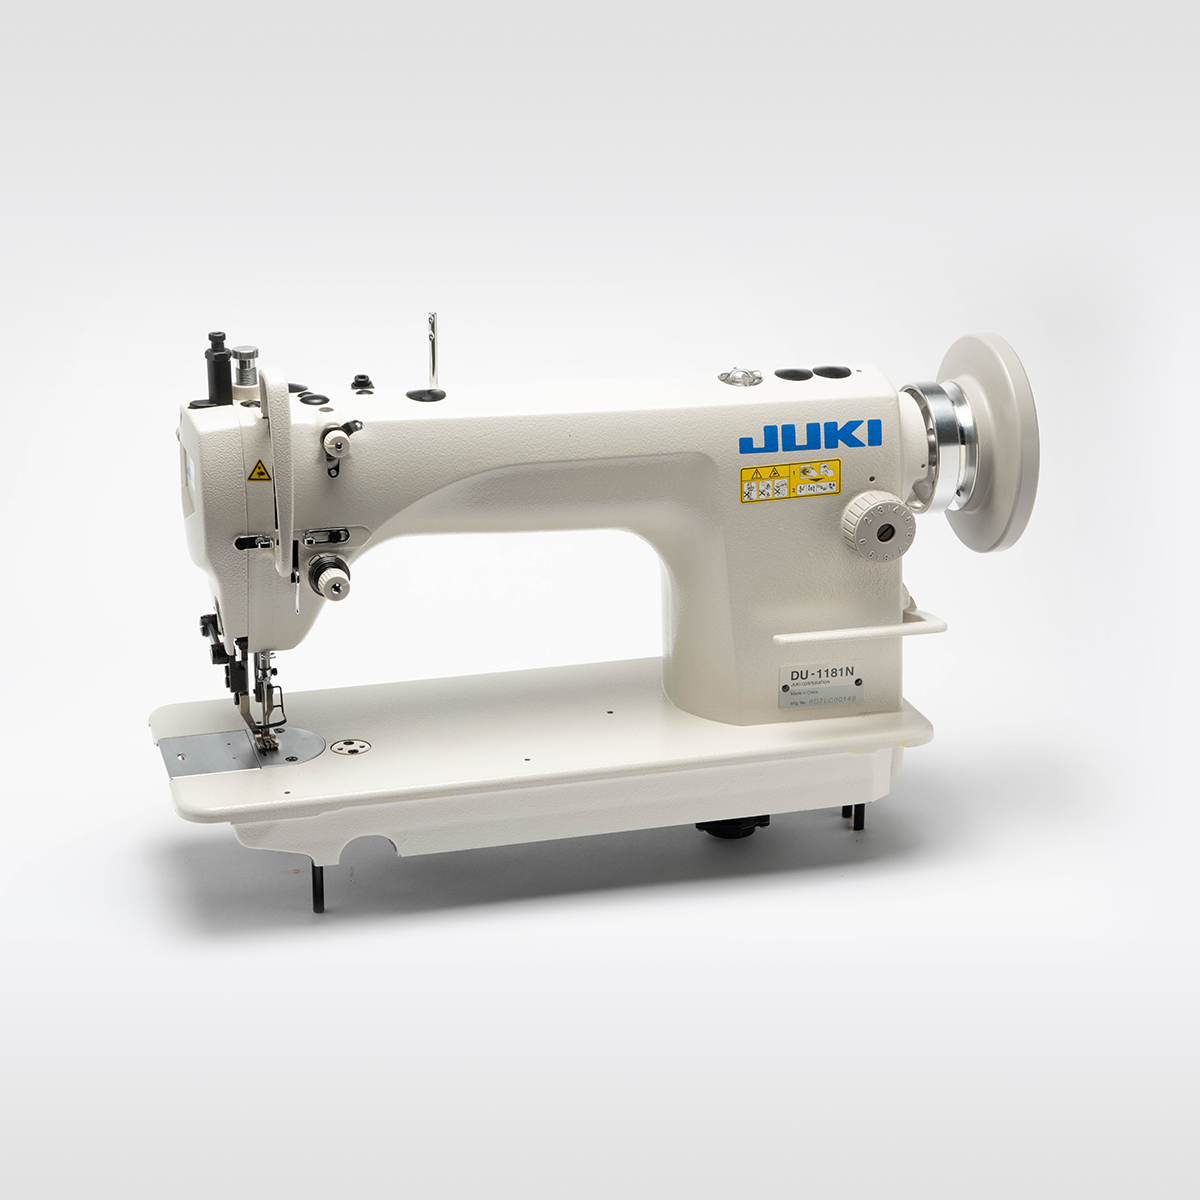 Juki Original - Industrial Single Needle Sewing Machine Bobbins 12 Pack  (Original Juki Part) Made in Japan